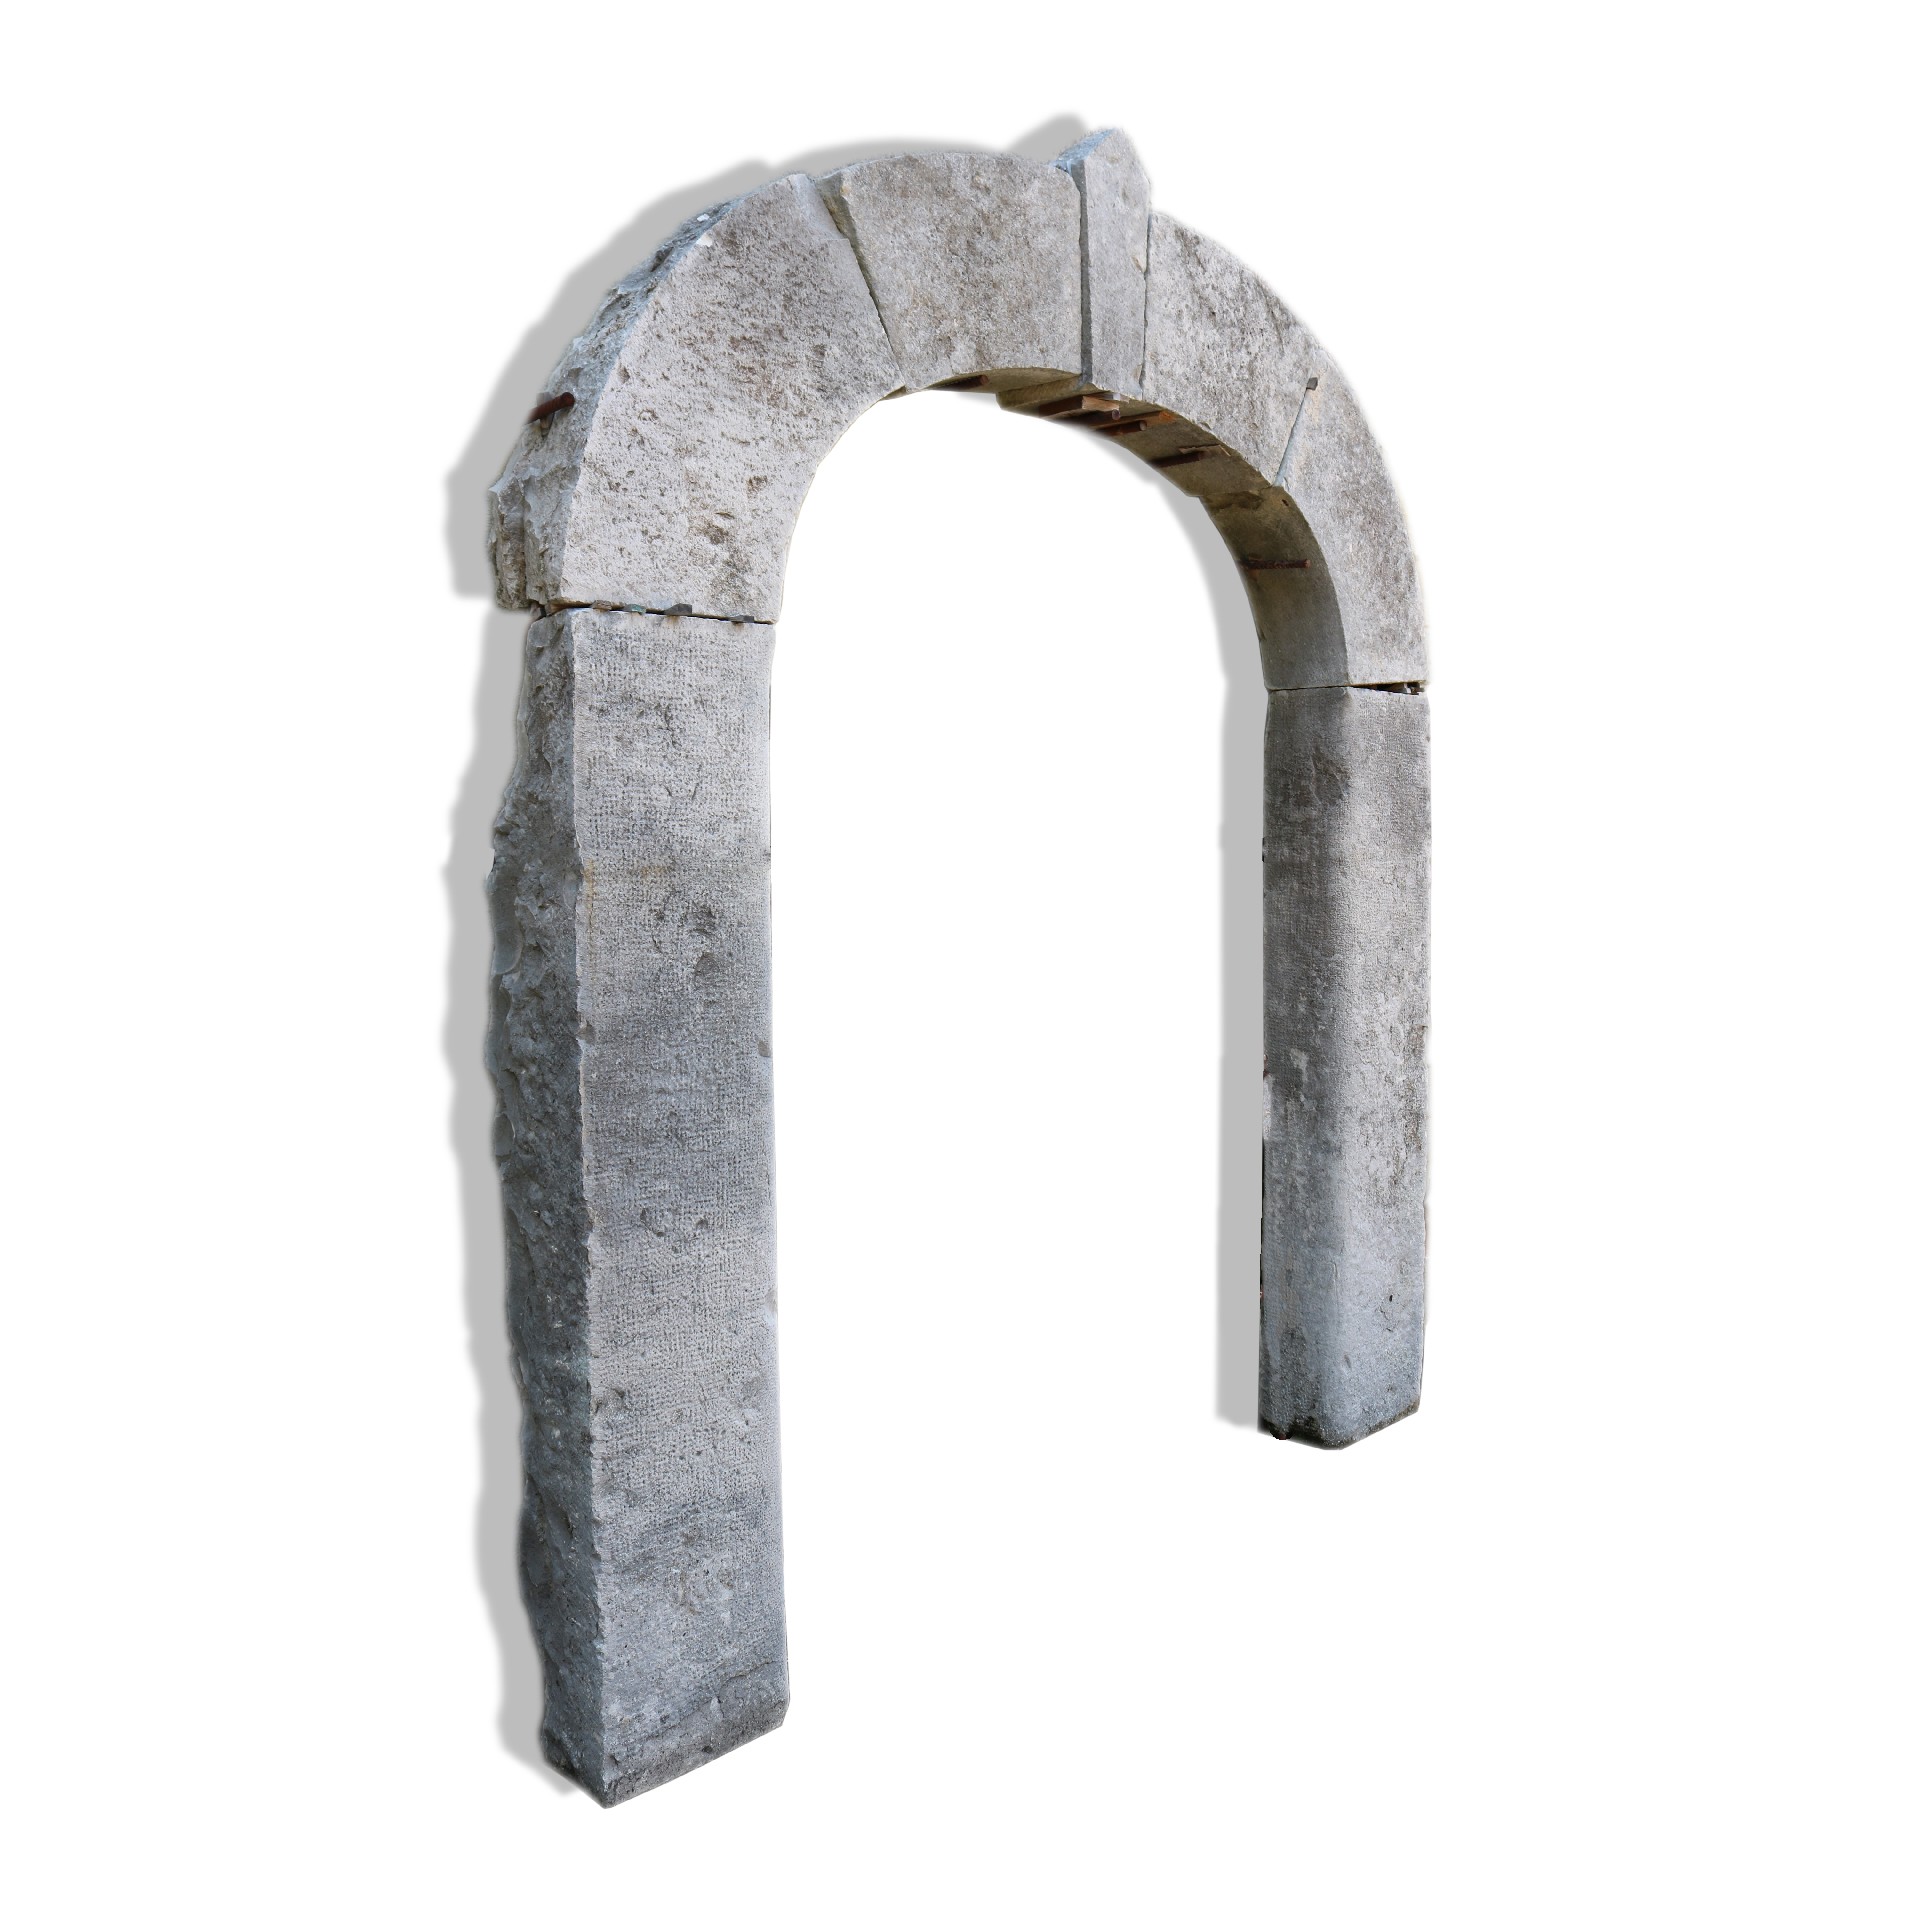 Antico portale in pietra. Epoca 1800. - 1